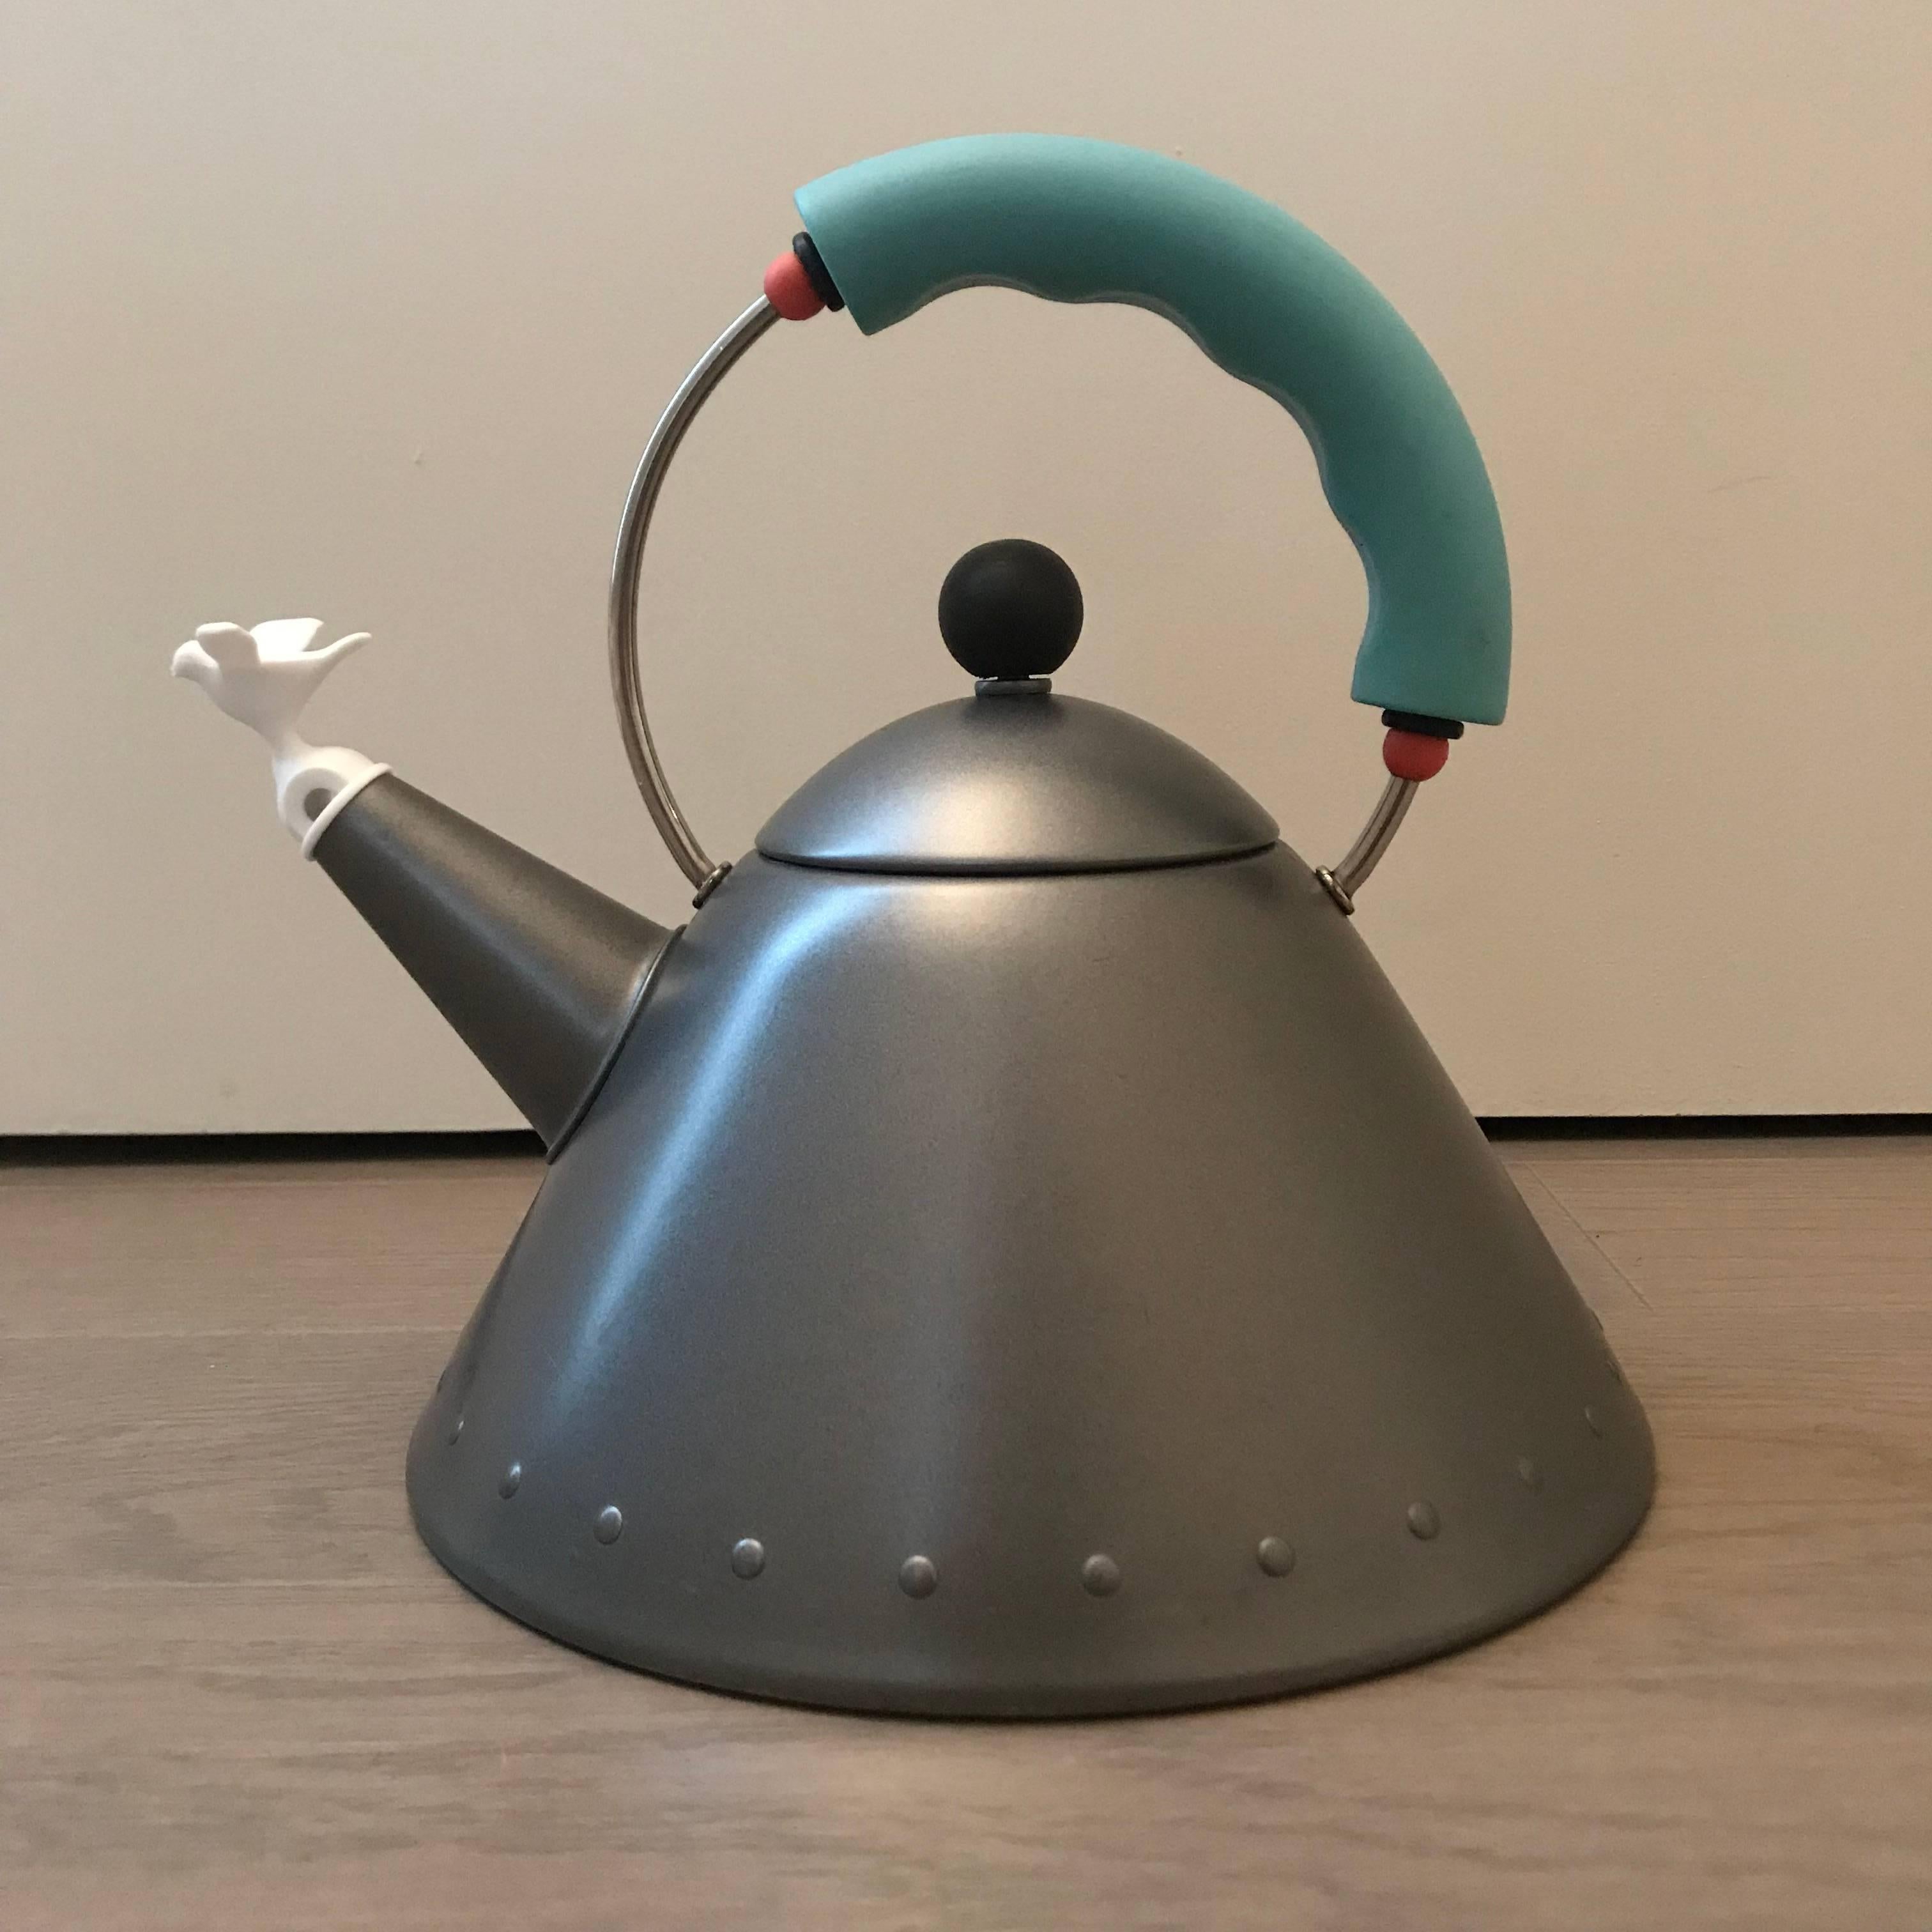 Post-Modern Rare Postmodern Tea Kettle “9093 Kettle” by Michael Graves for Alessi